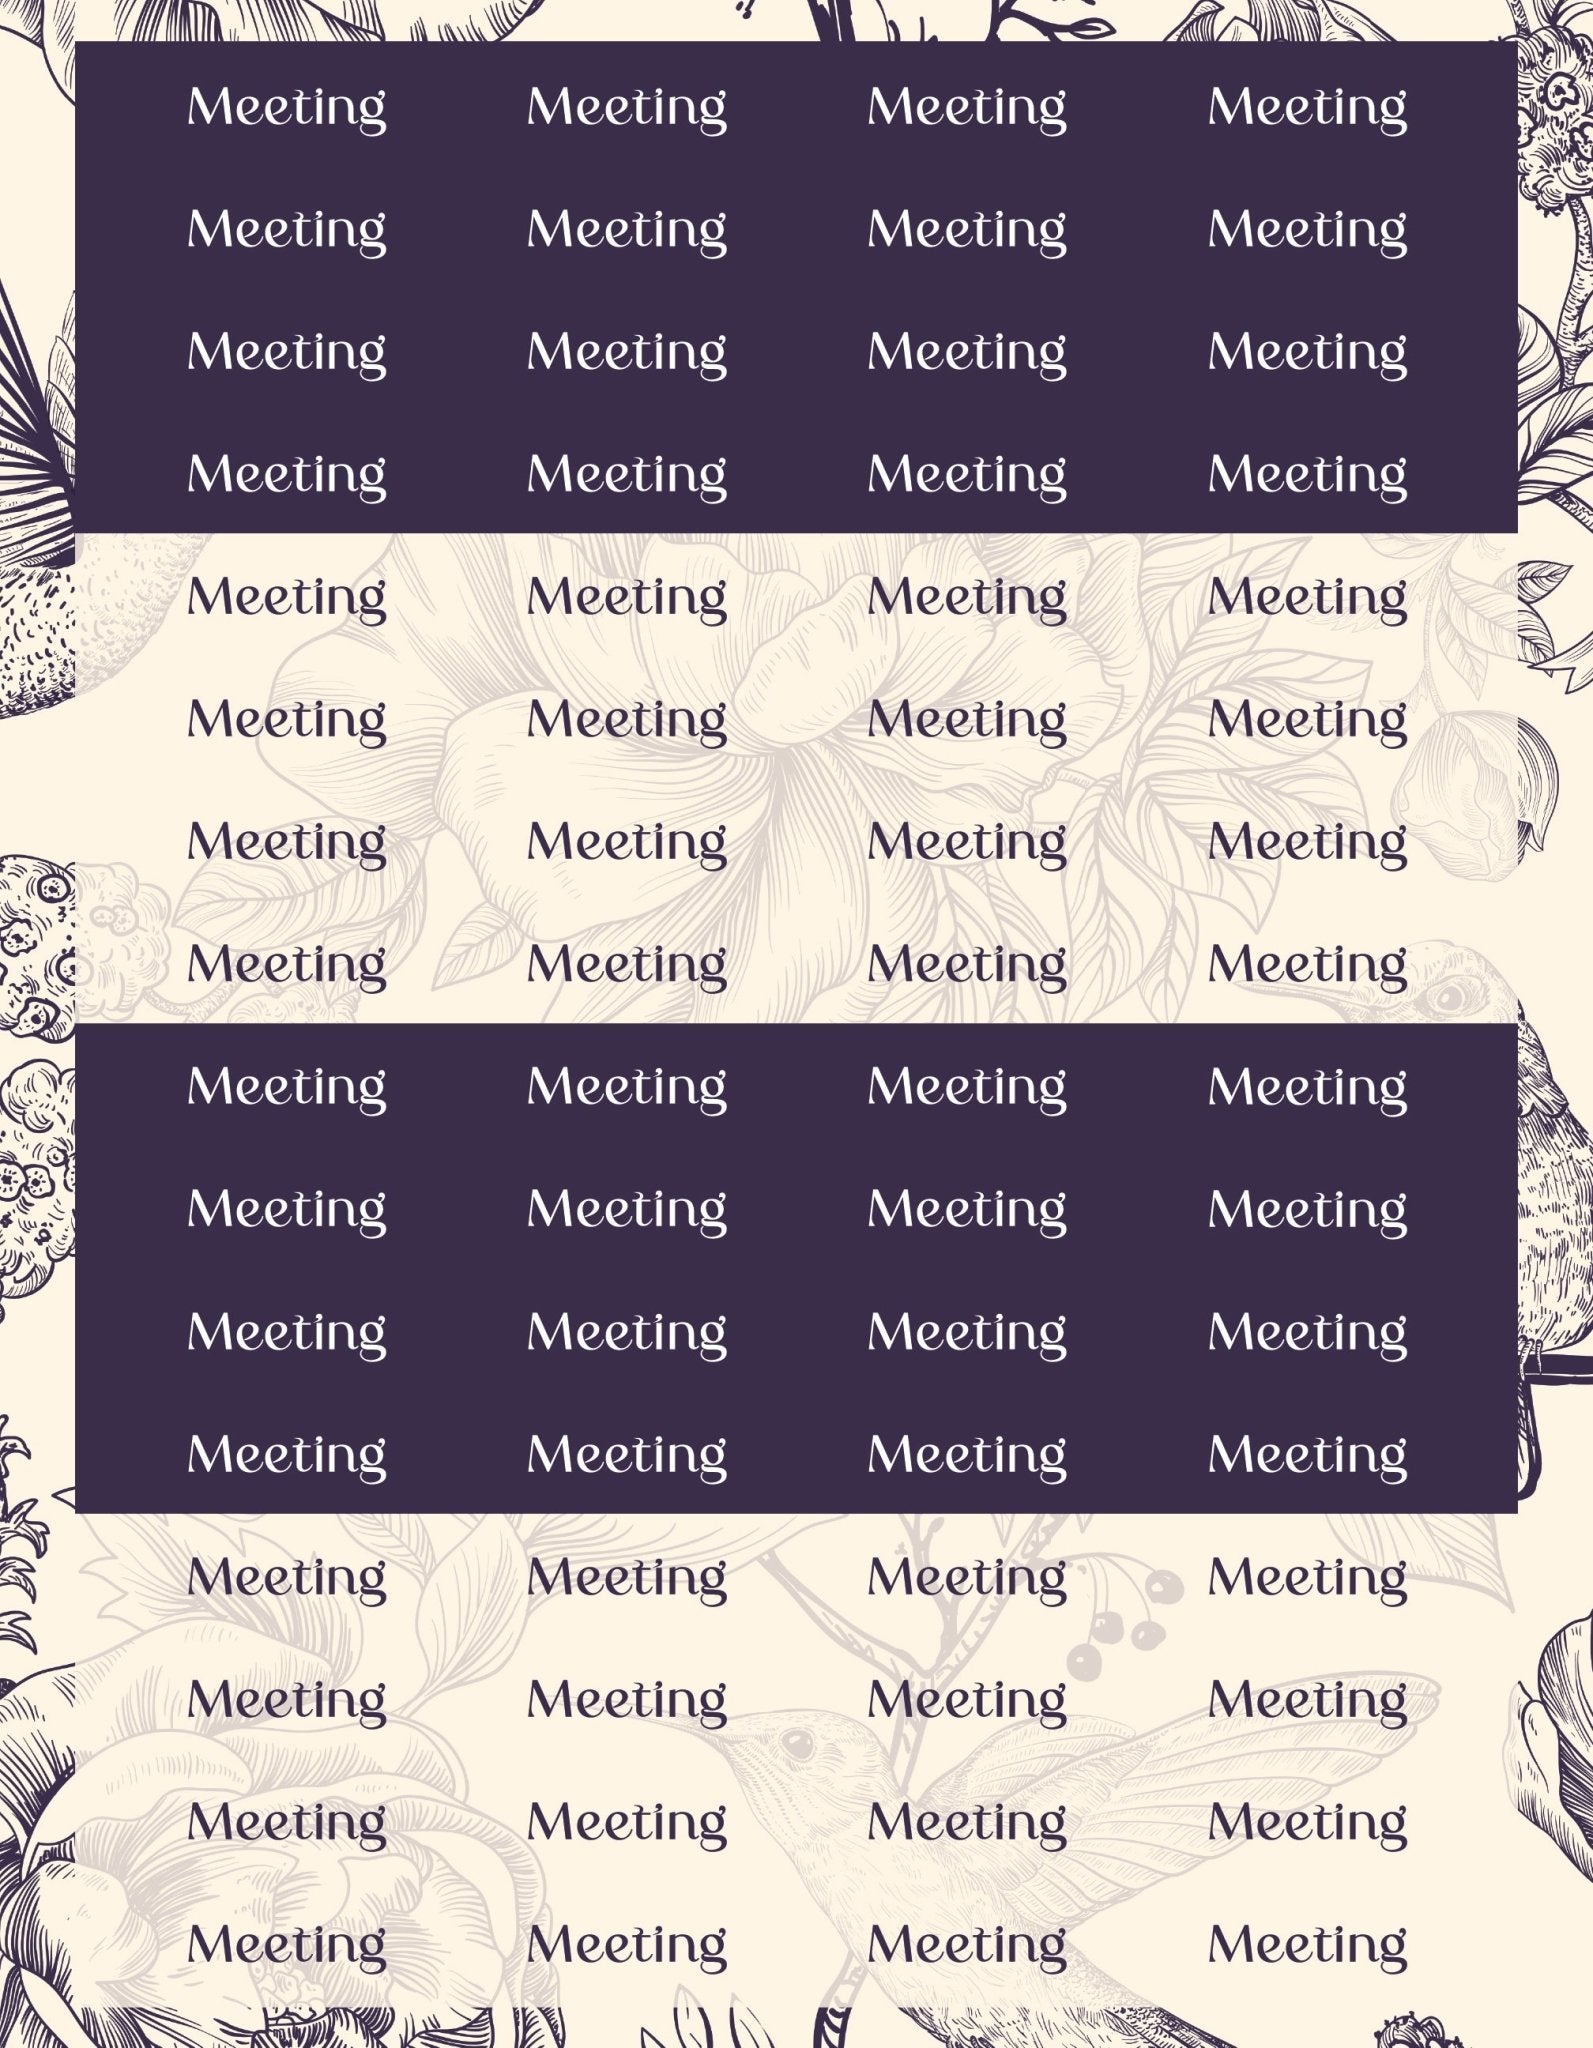 Meeting Sticker Sheets - 9 Designs/Colors - Colibri Paper Co